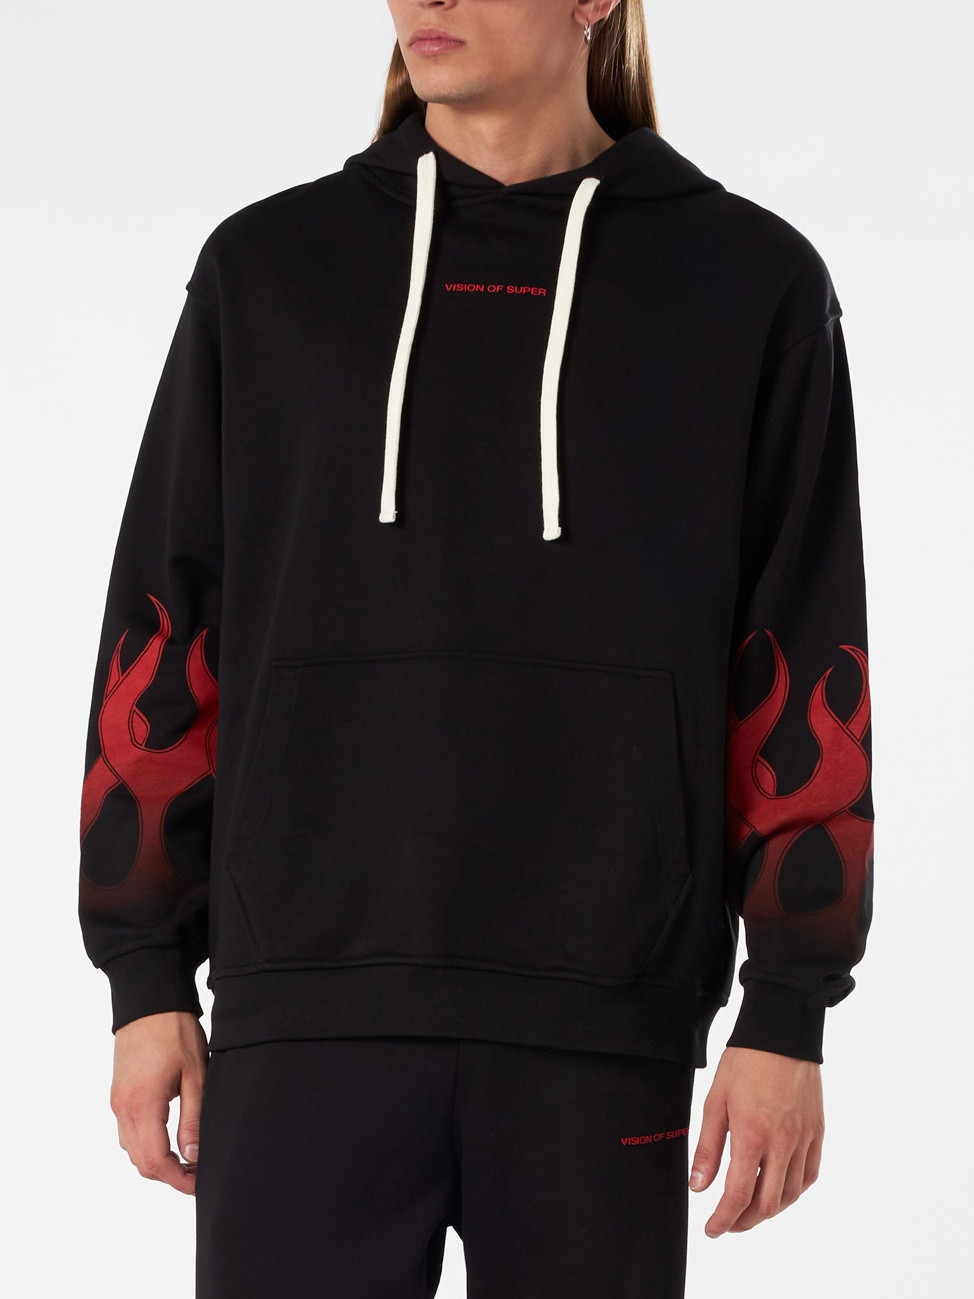 Vision of Super - Sweatshirt with racing flames, Black, large image number 2